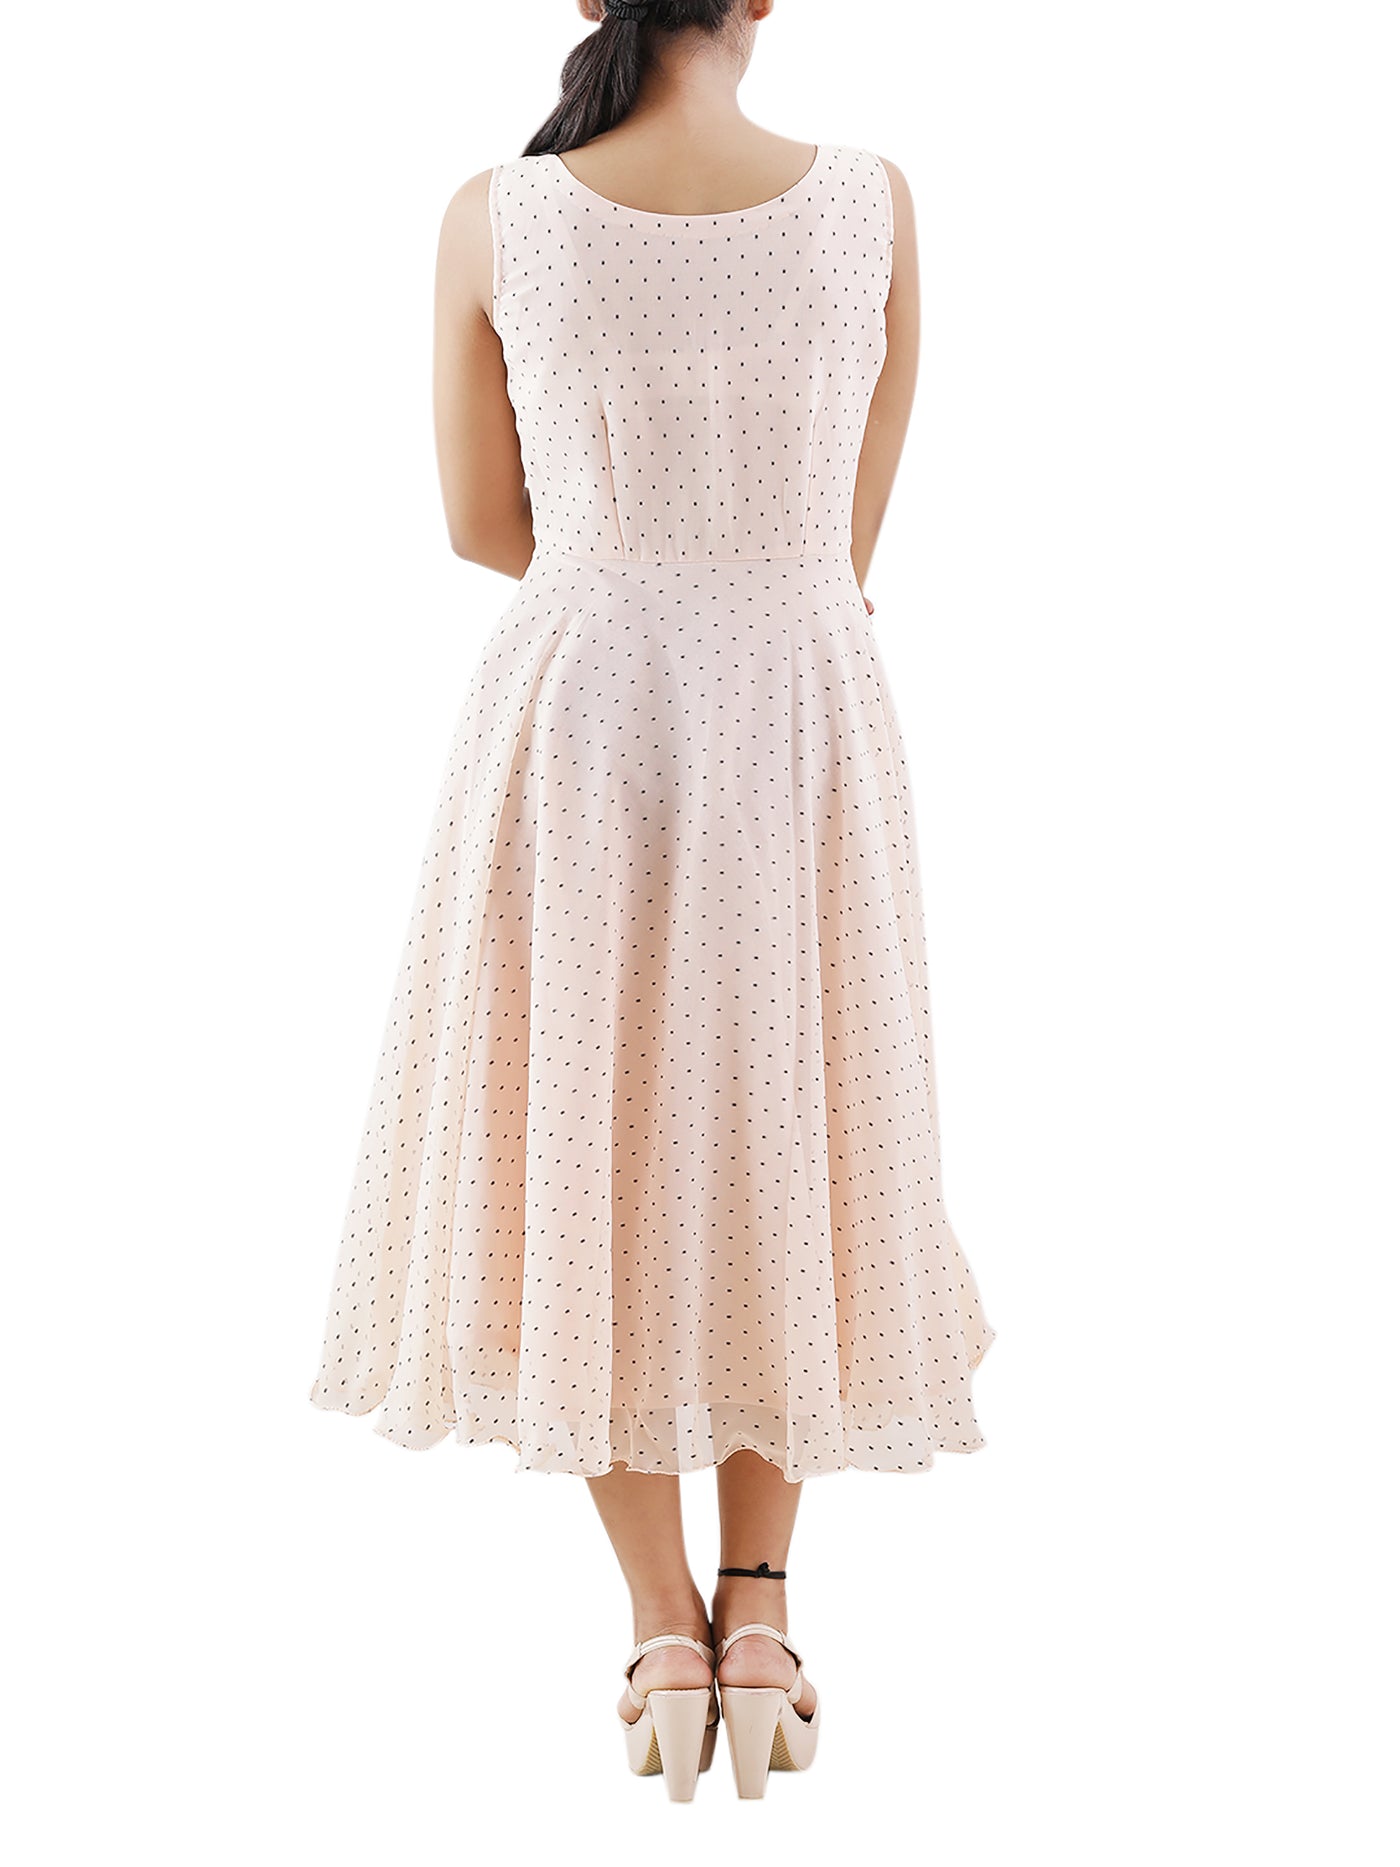 Polka Dots Elegance Dress